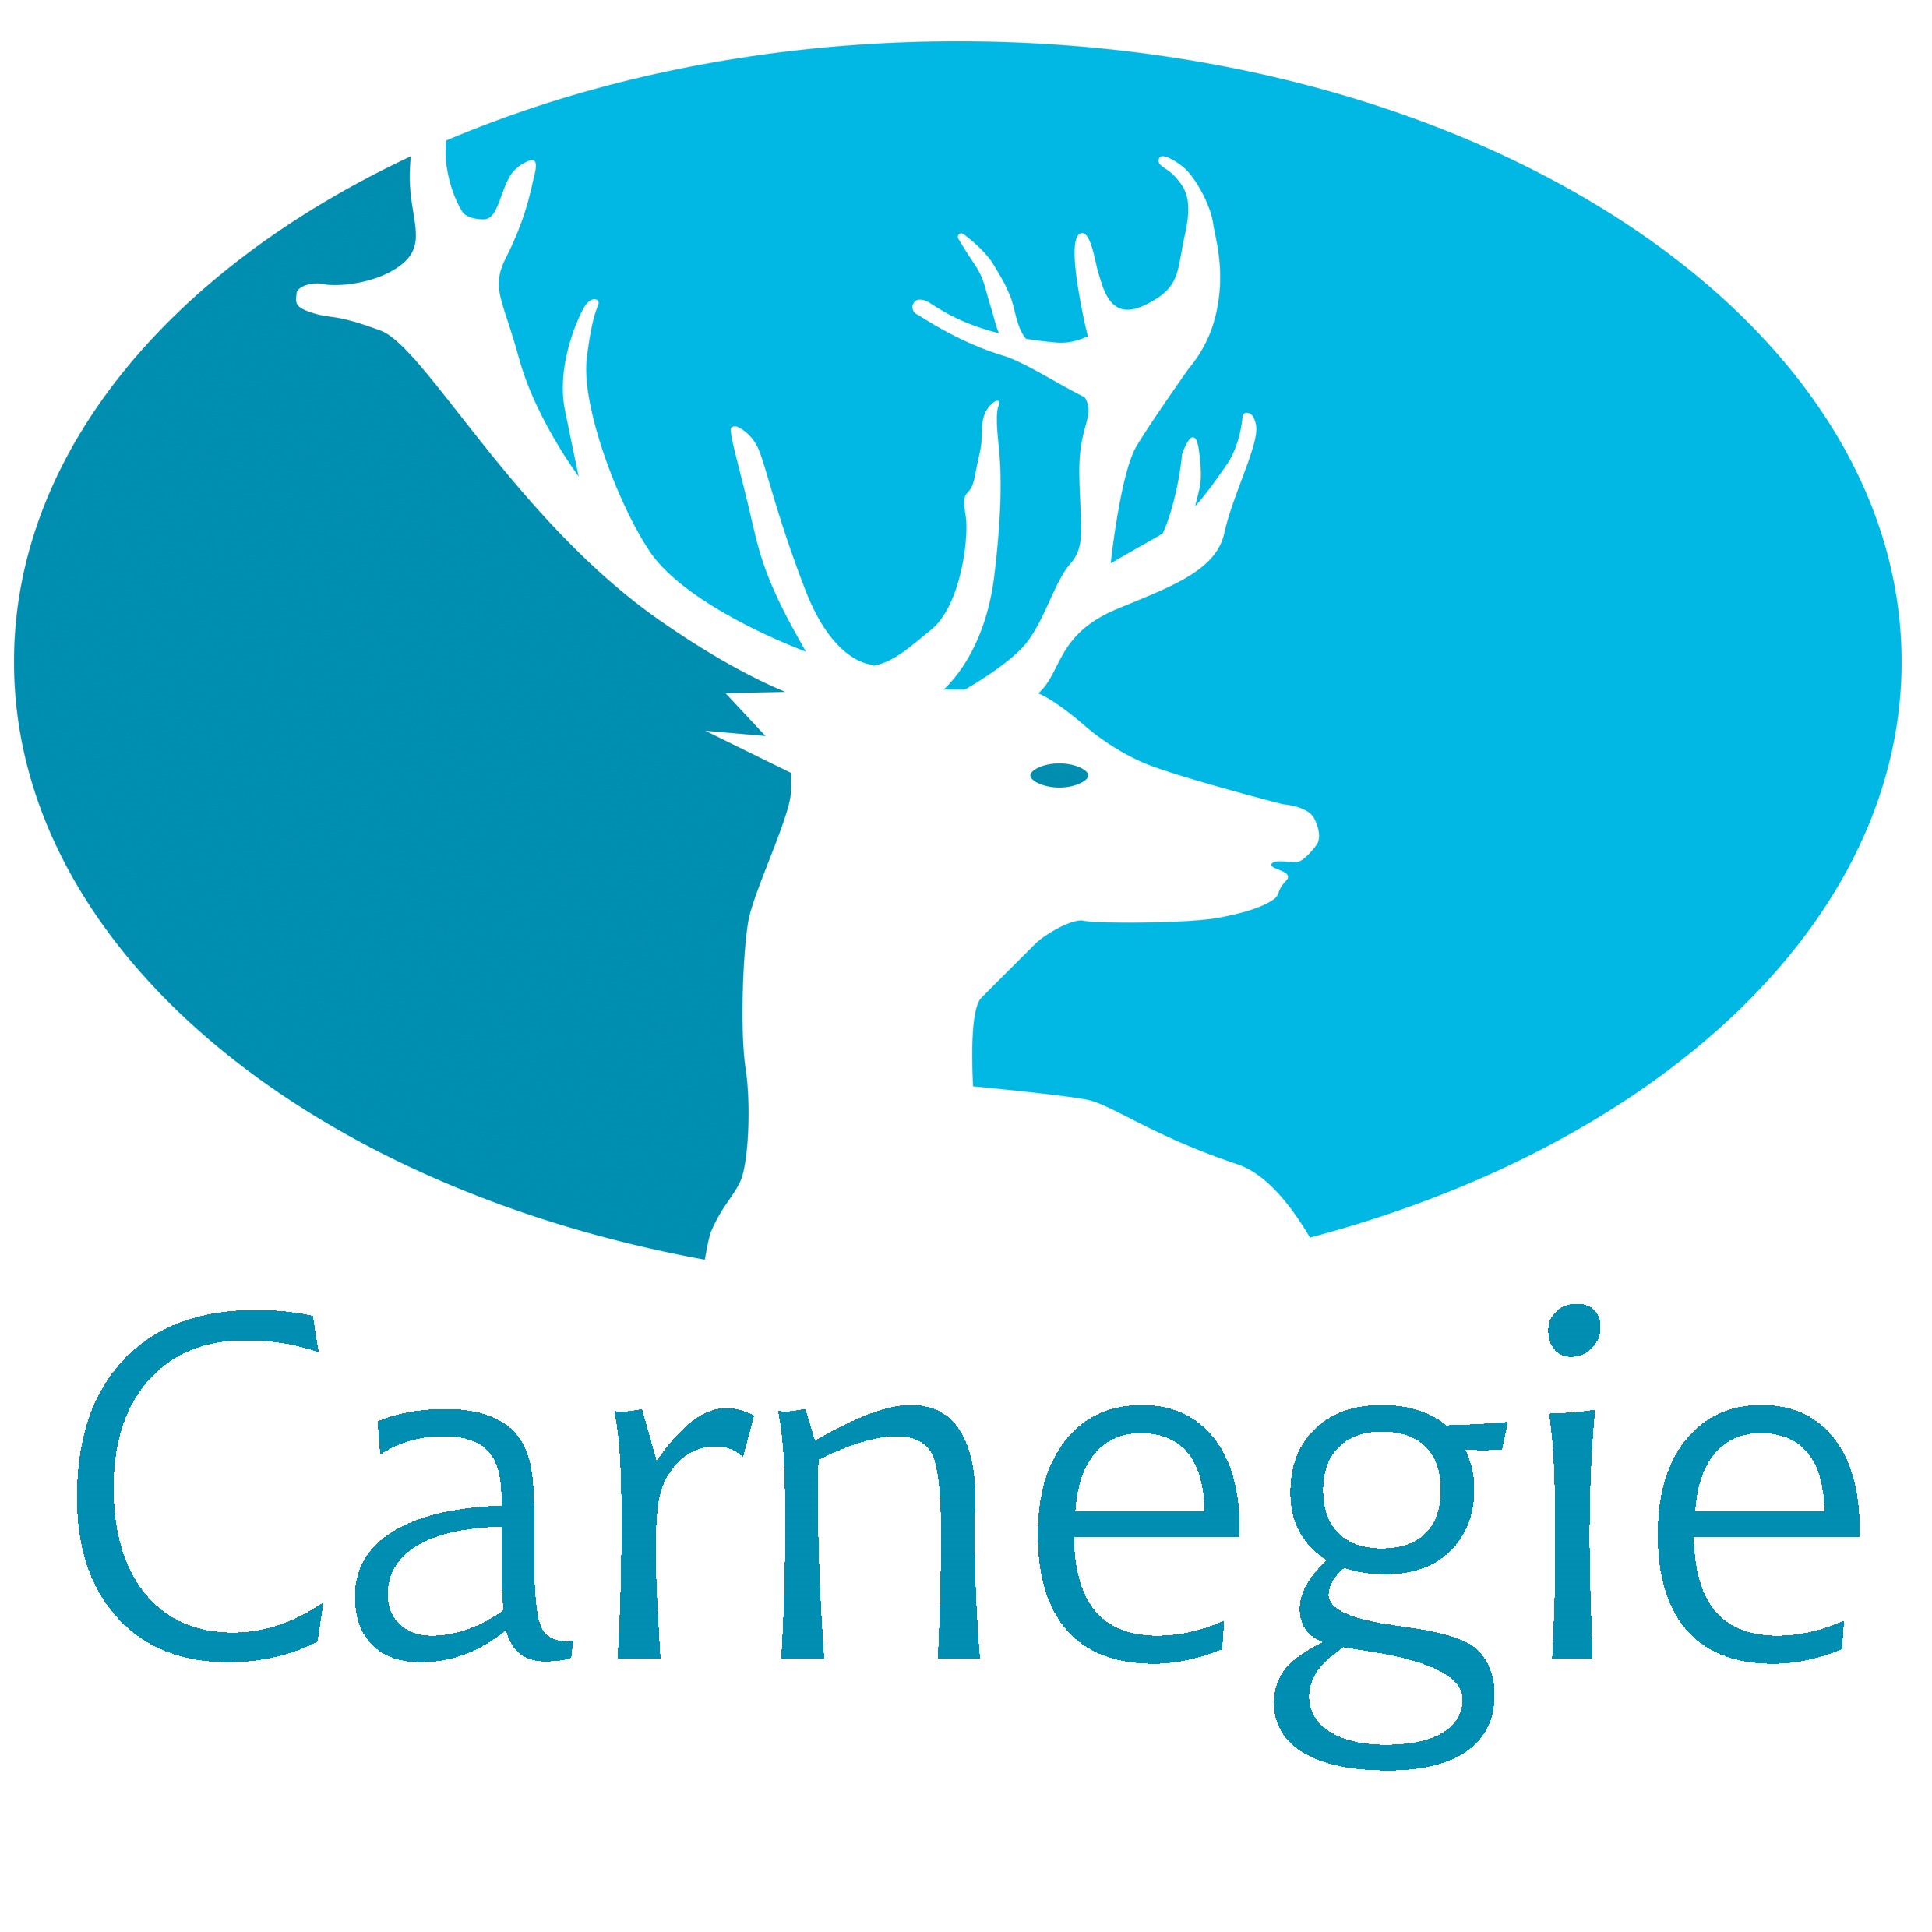 Why Carnegie?